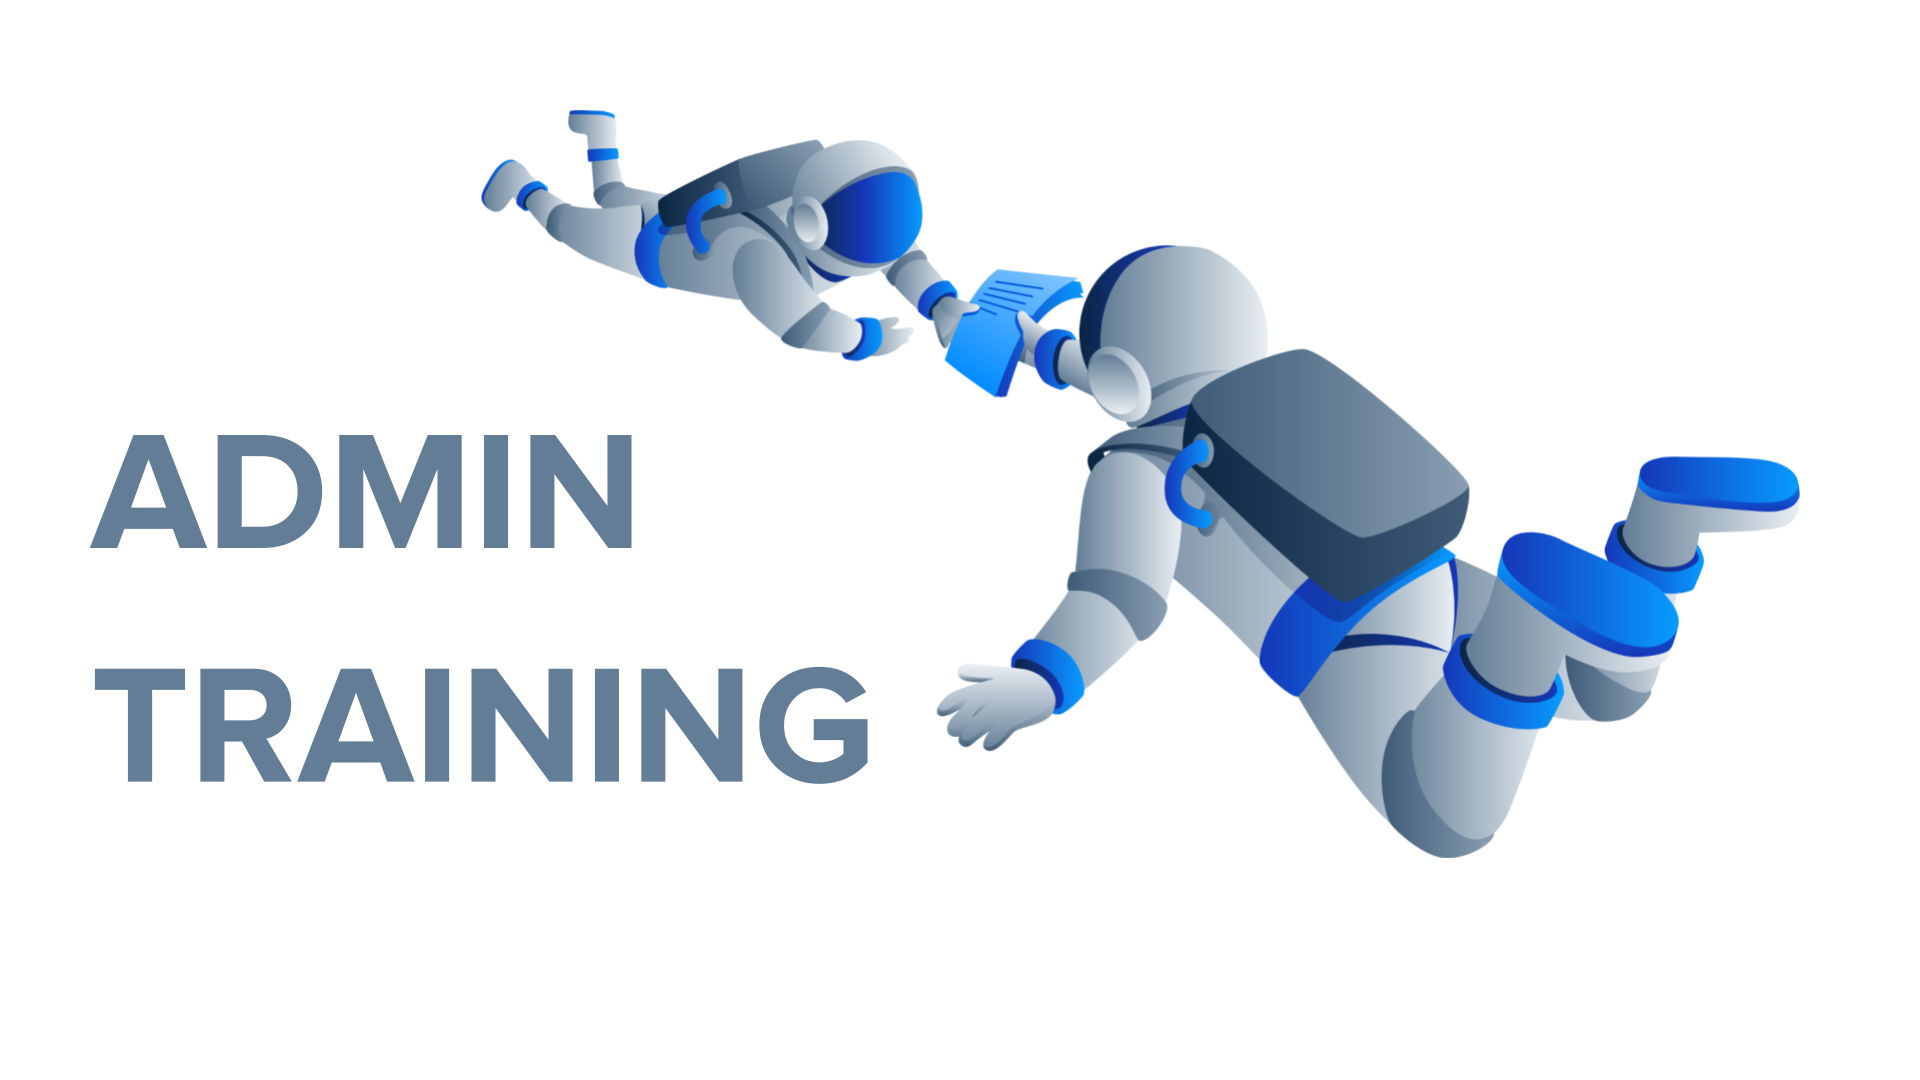 Admin Training logo